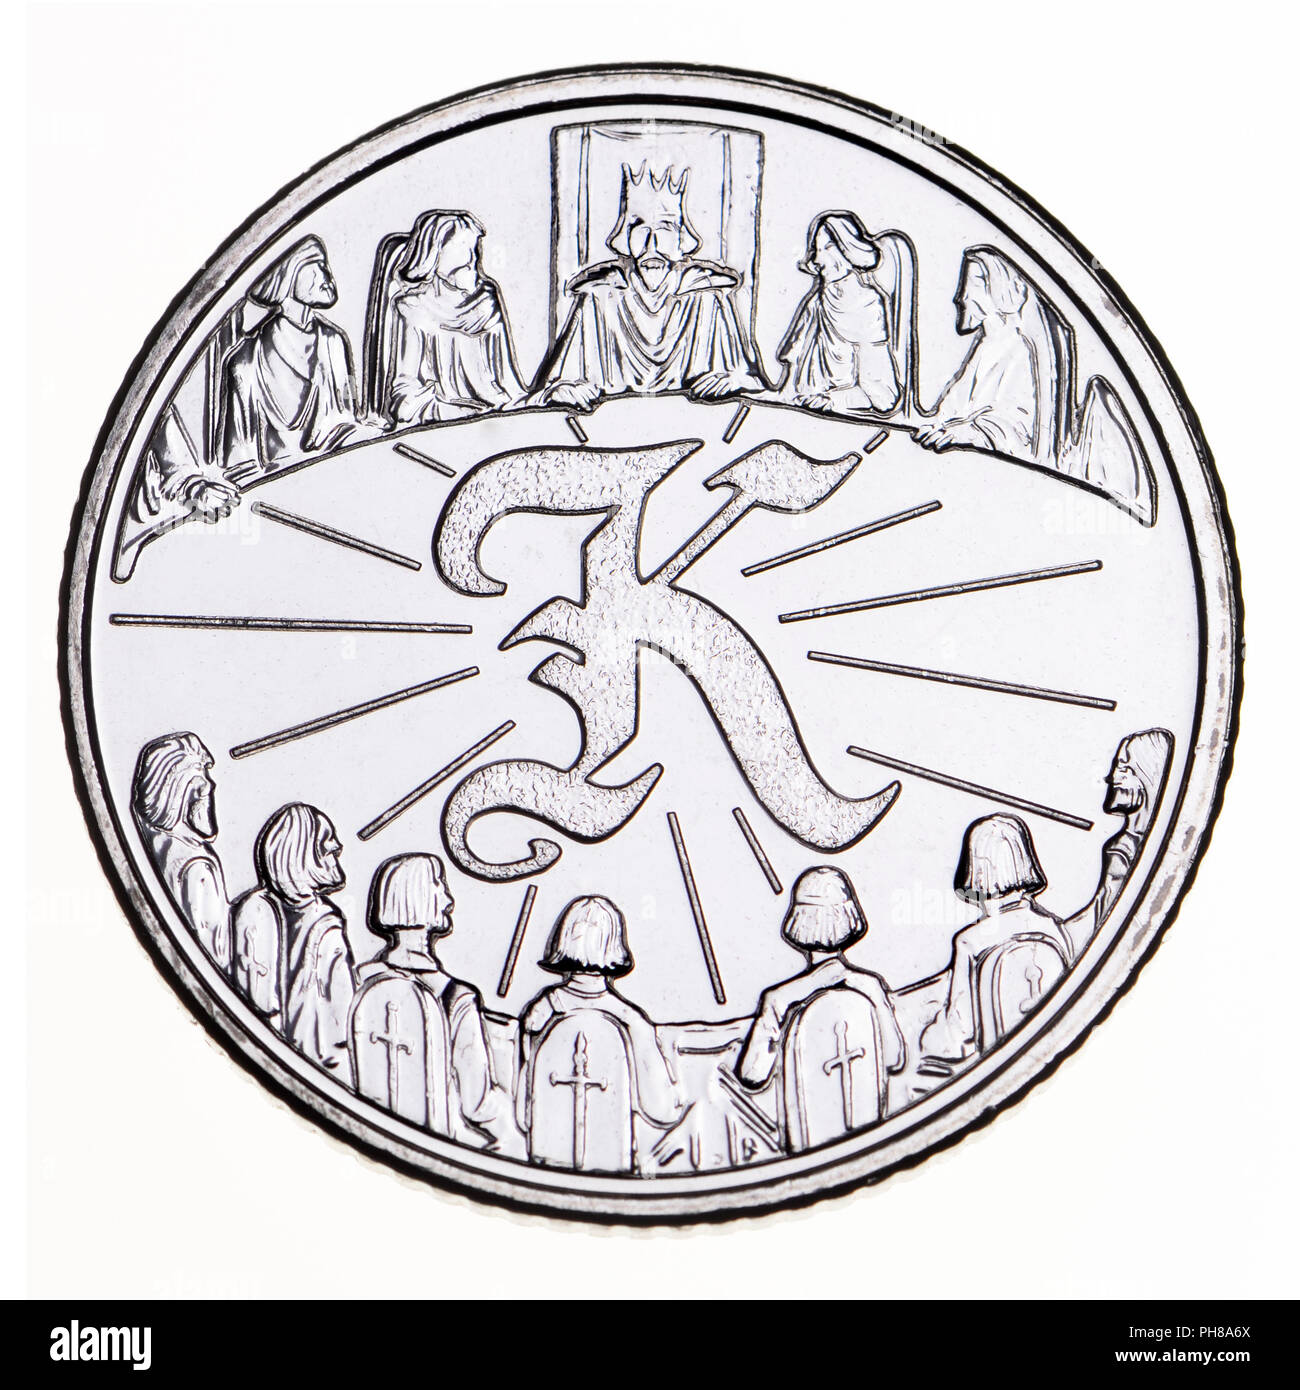 British 10p moneta (retromarcia) da 2018 alfabeti serie, celebrando britannicità. K - Re Artù Foto Stock